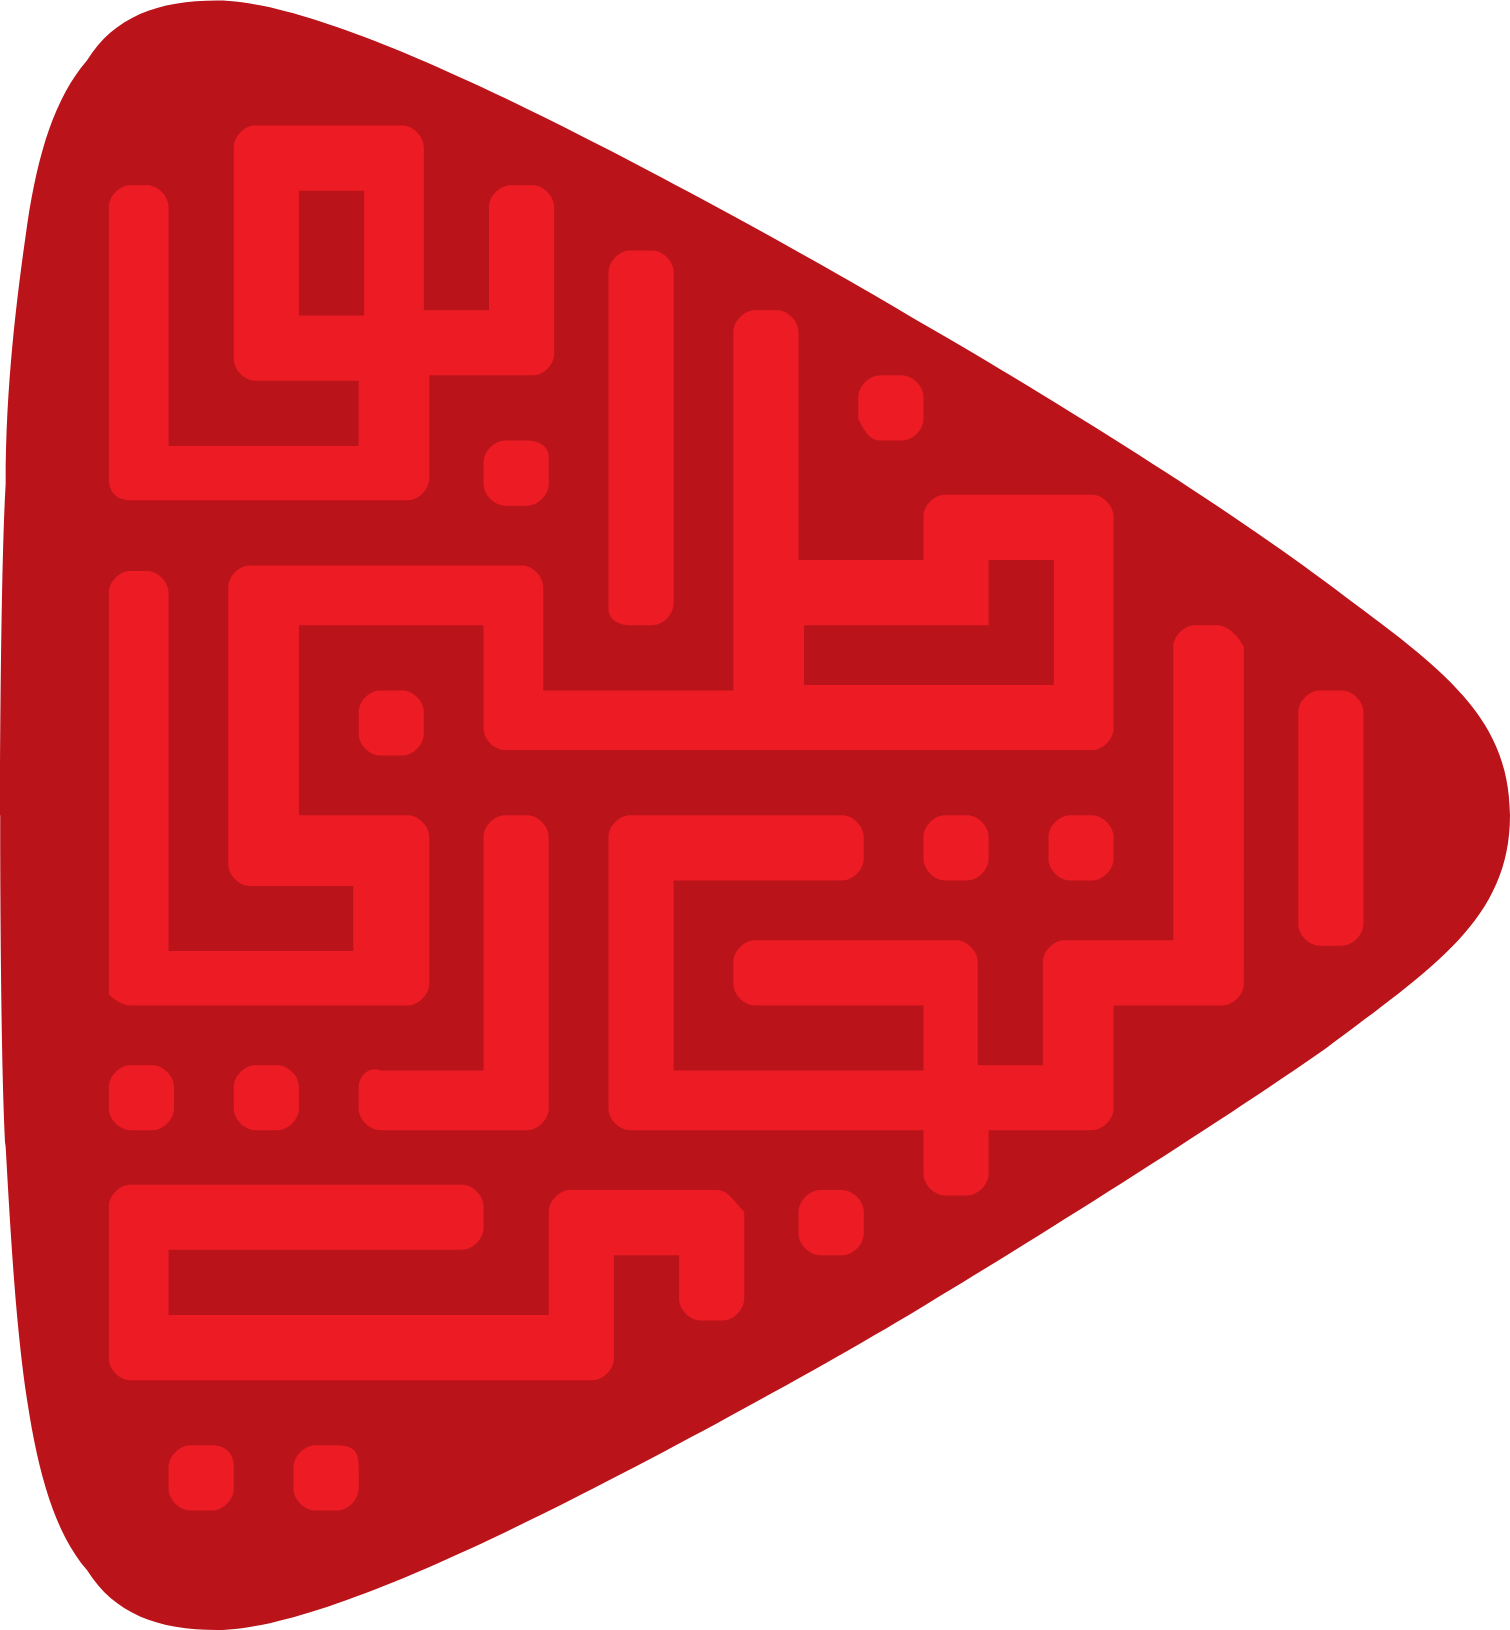 Abu Dhabi Commercial Bank (ADCB) logo (transparent PNG)